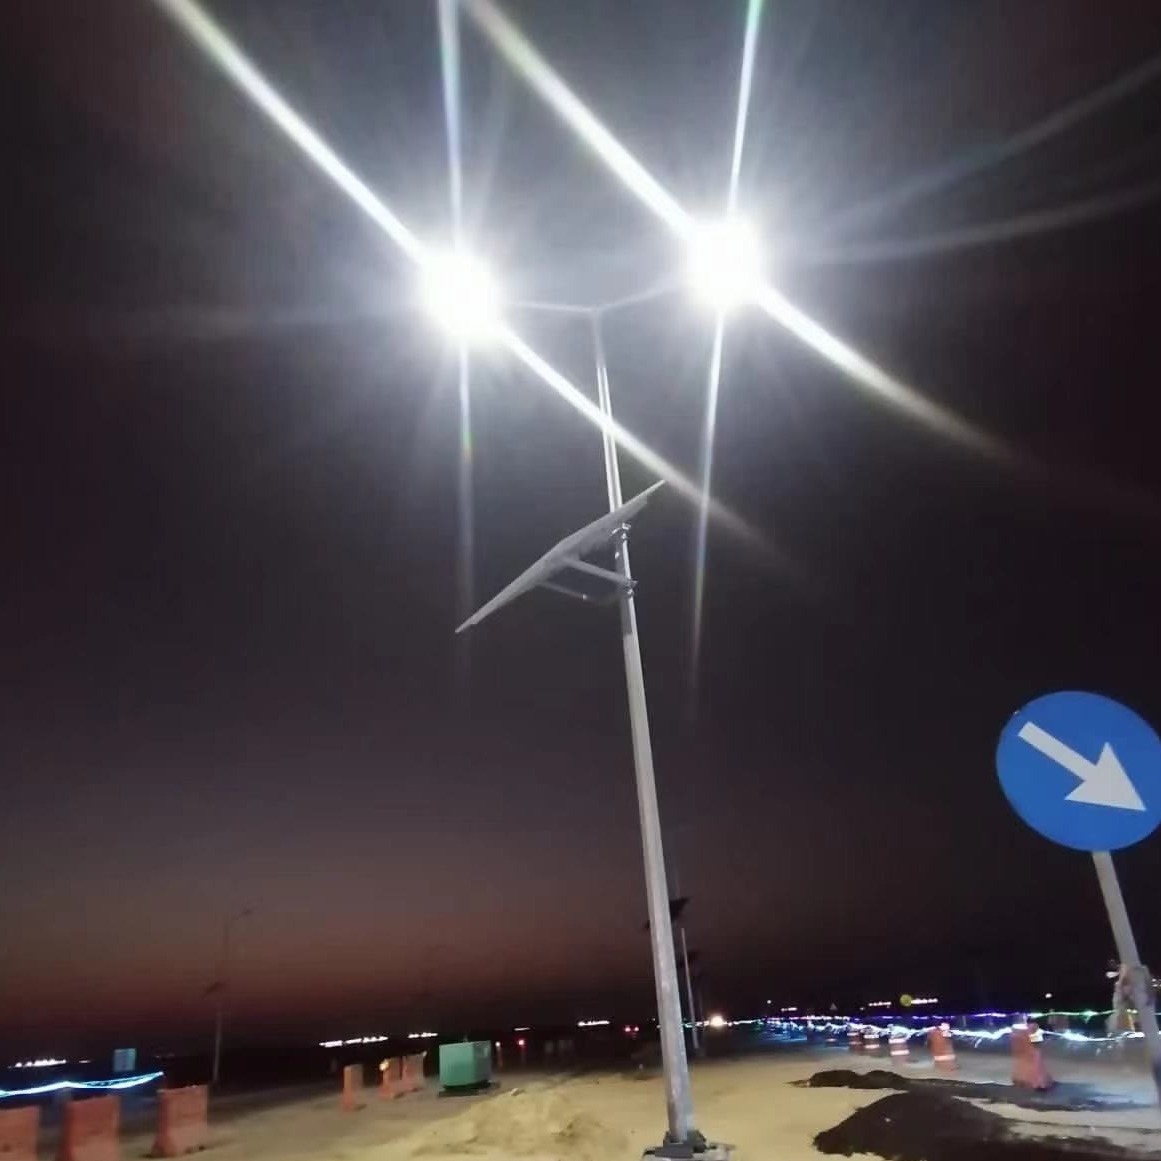 2000шт 200W Hi-Slim Street Light в MIP-upgrade-Tanajib-Roads-Saudi-Aramco